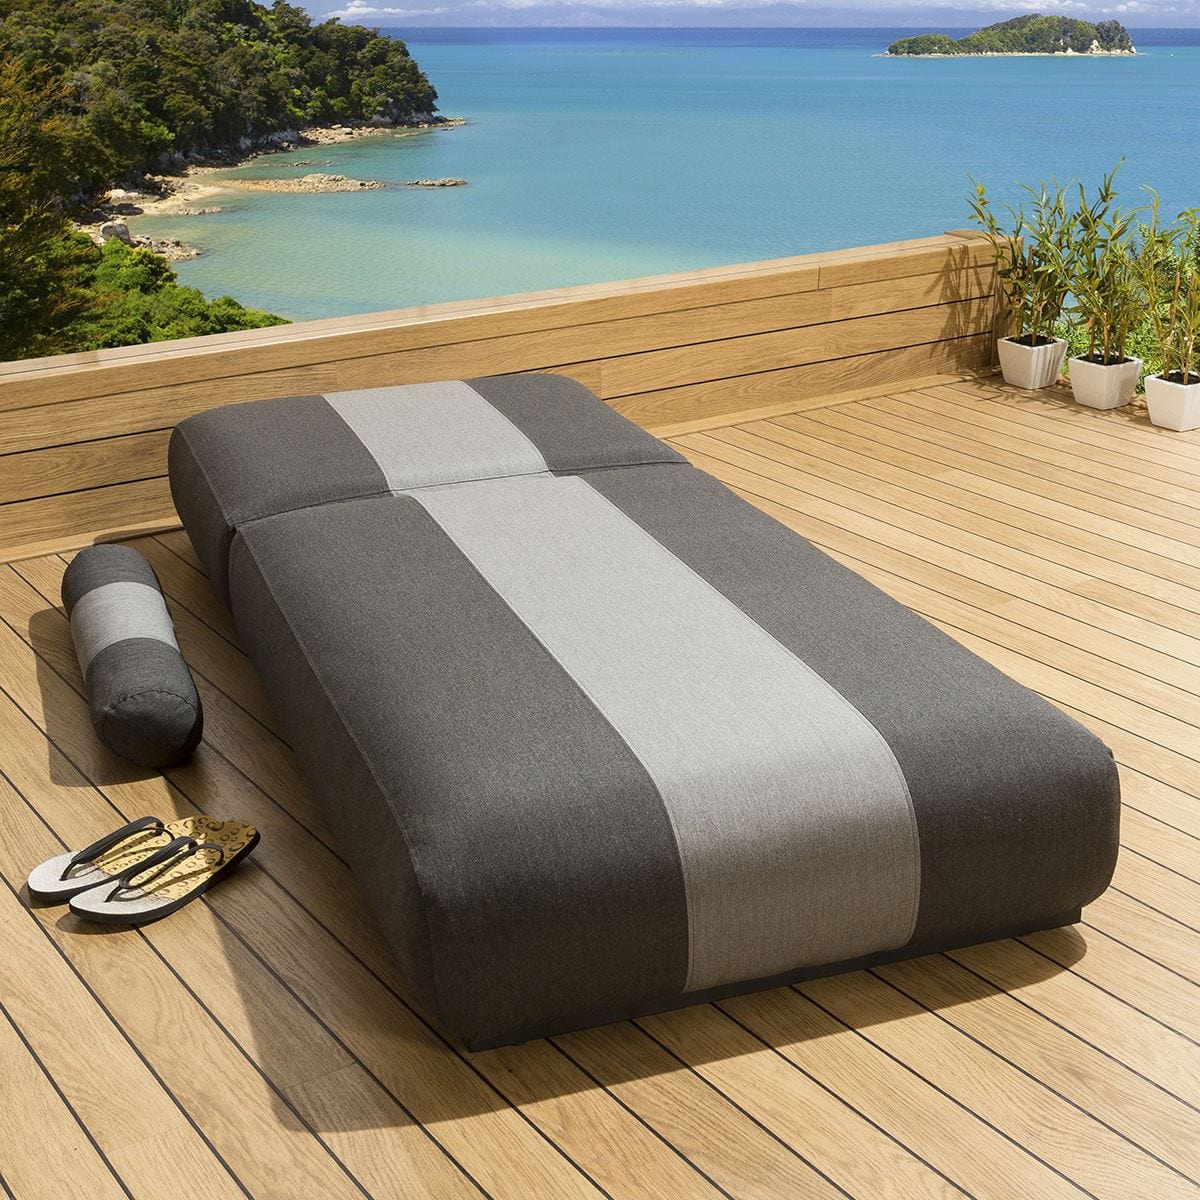 Quatropi Quatropi Premium Garden Fabric Lounger / Sunbed / Day Bed Black / Grey Cancun